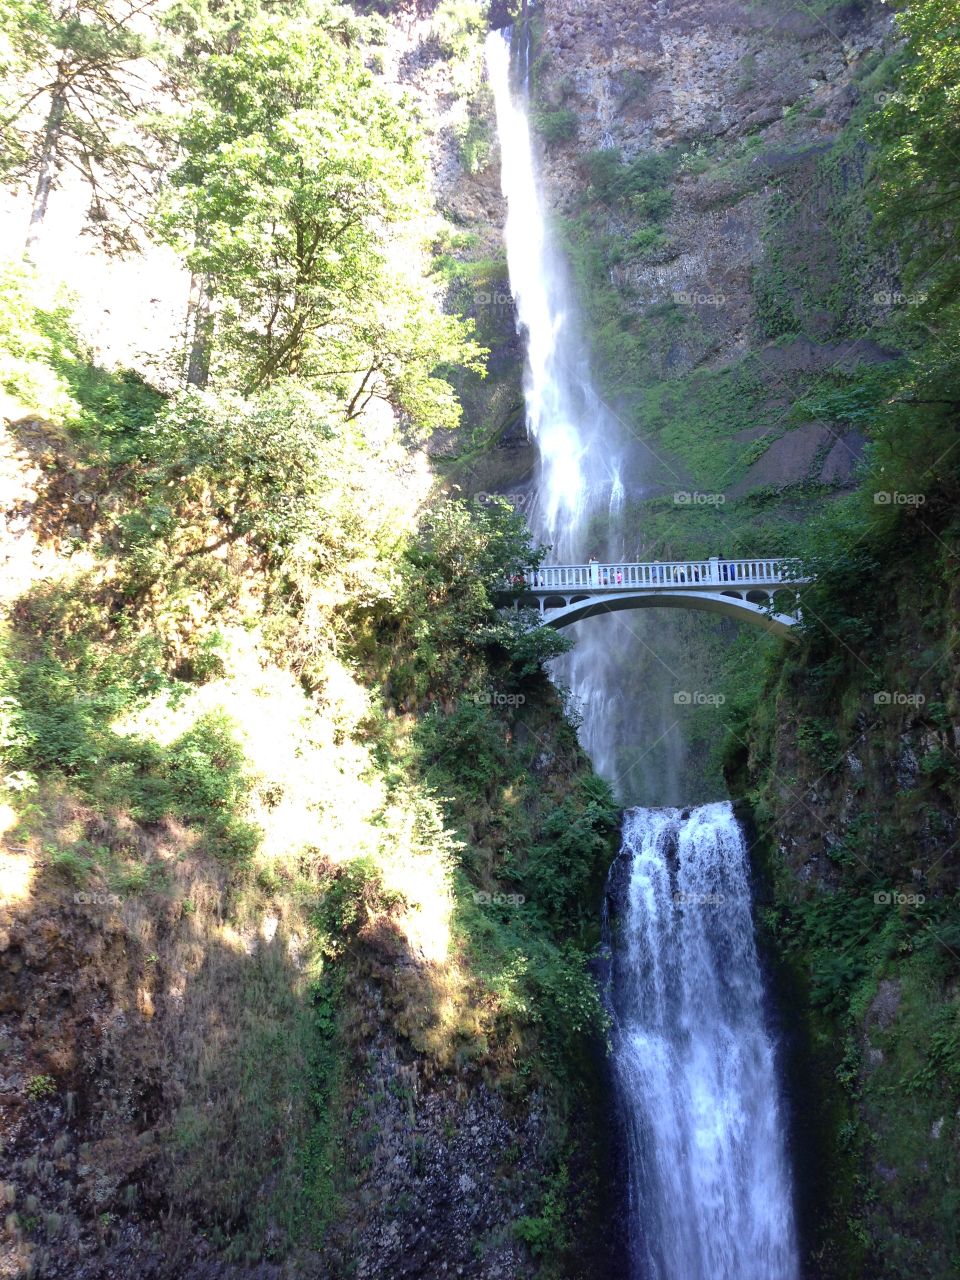 Multnomah Falls outside of Portland, OR.